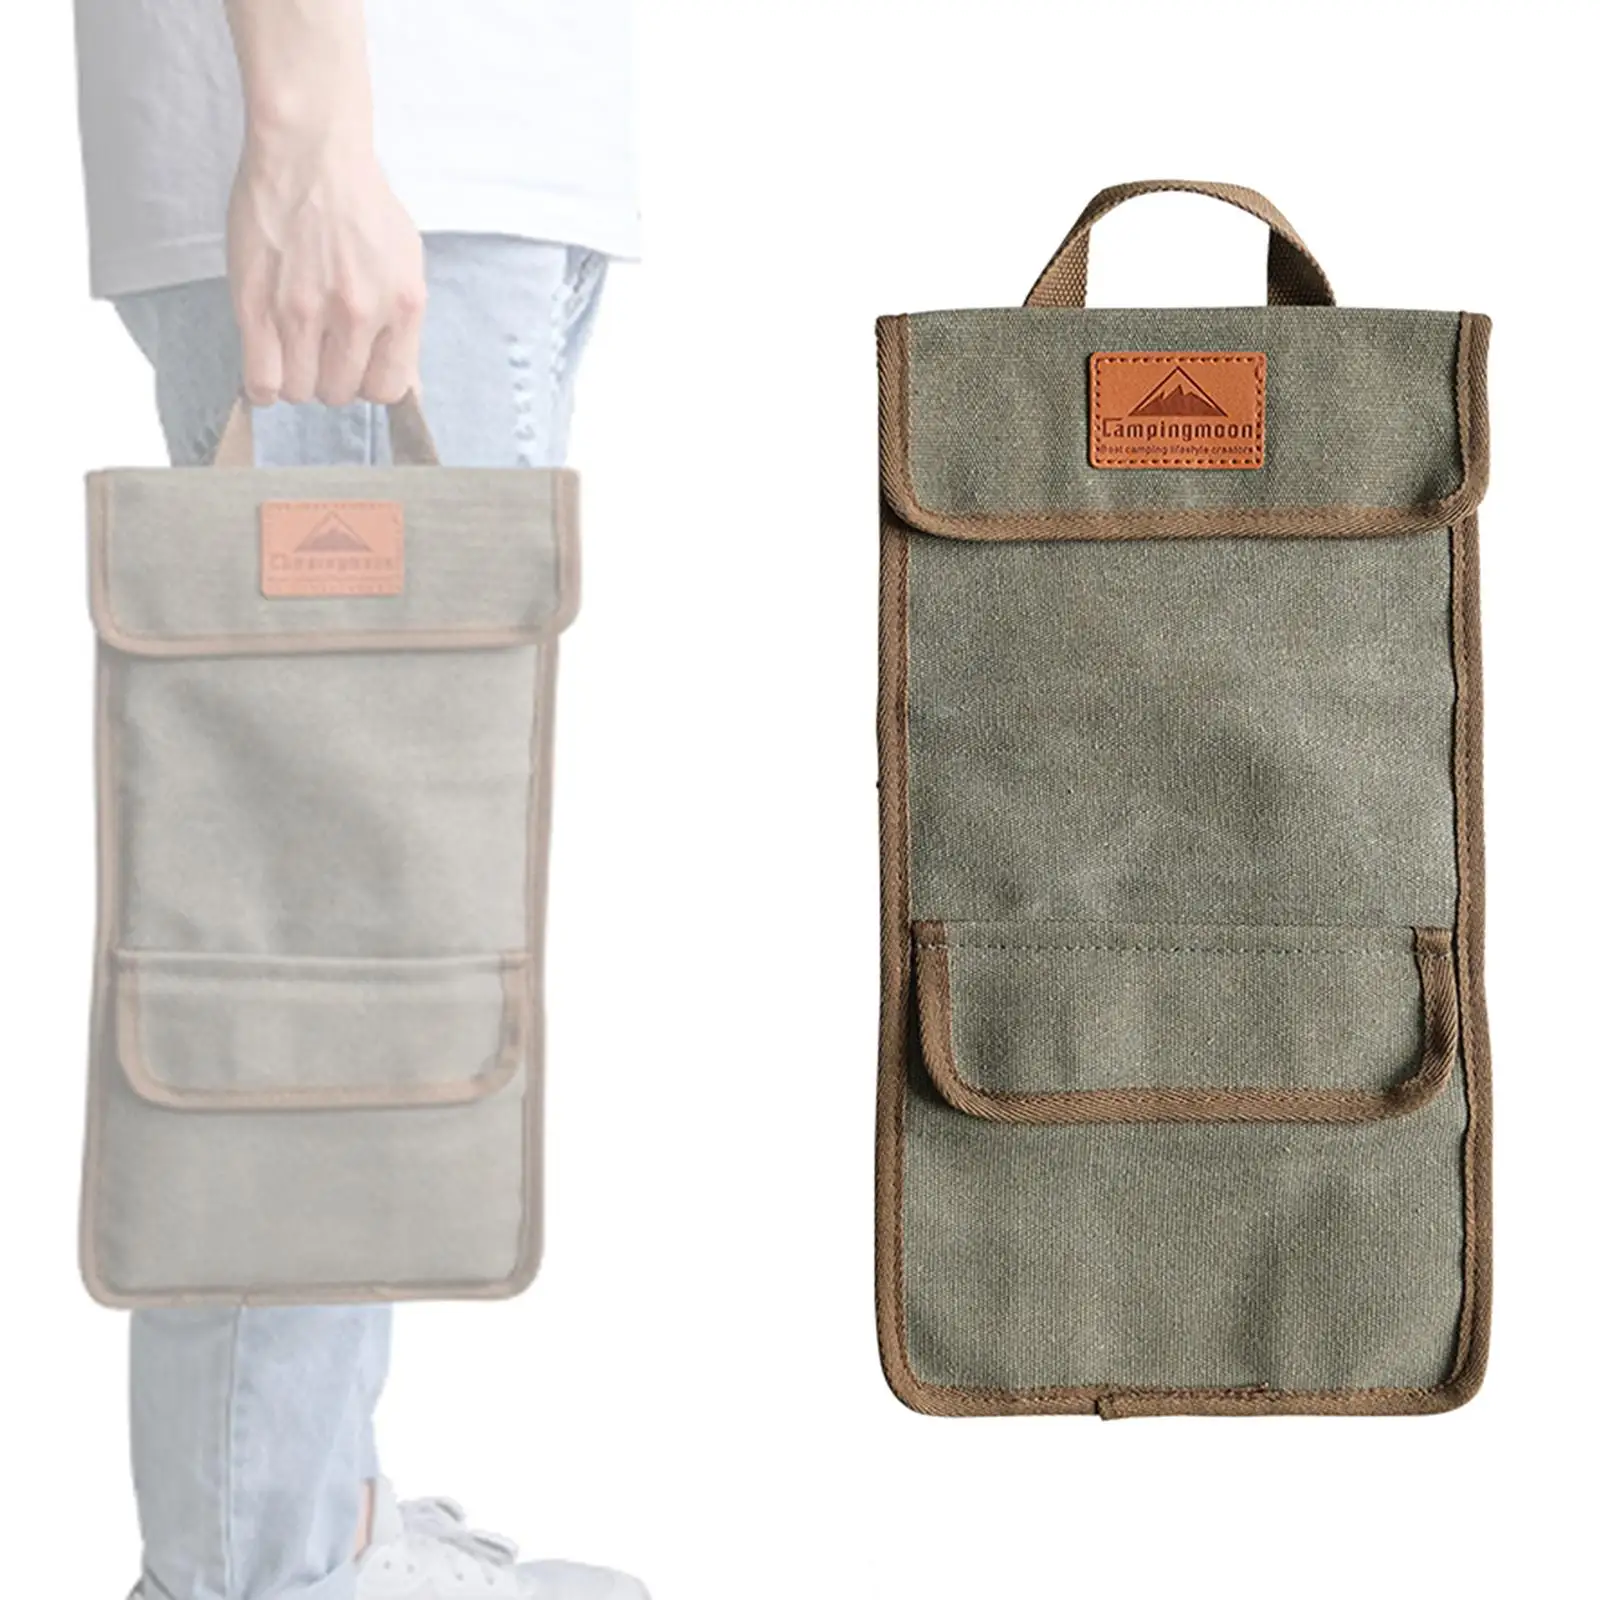 Durable Storage Carry Bag Organizer Handbag for Traveling Shop Camping